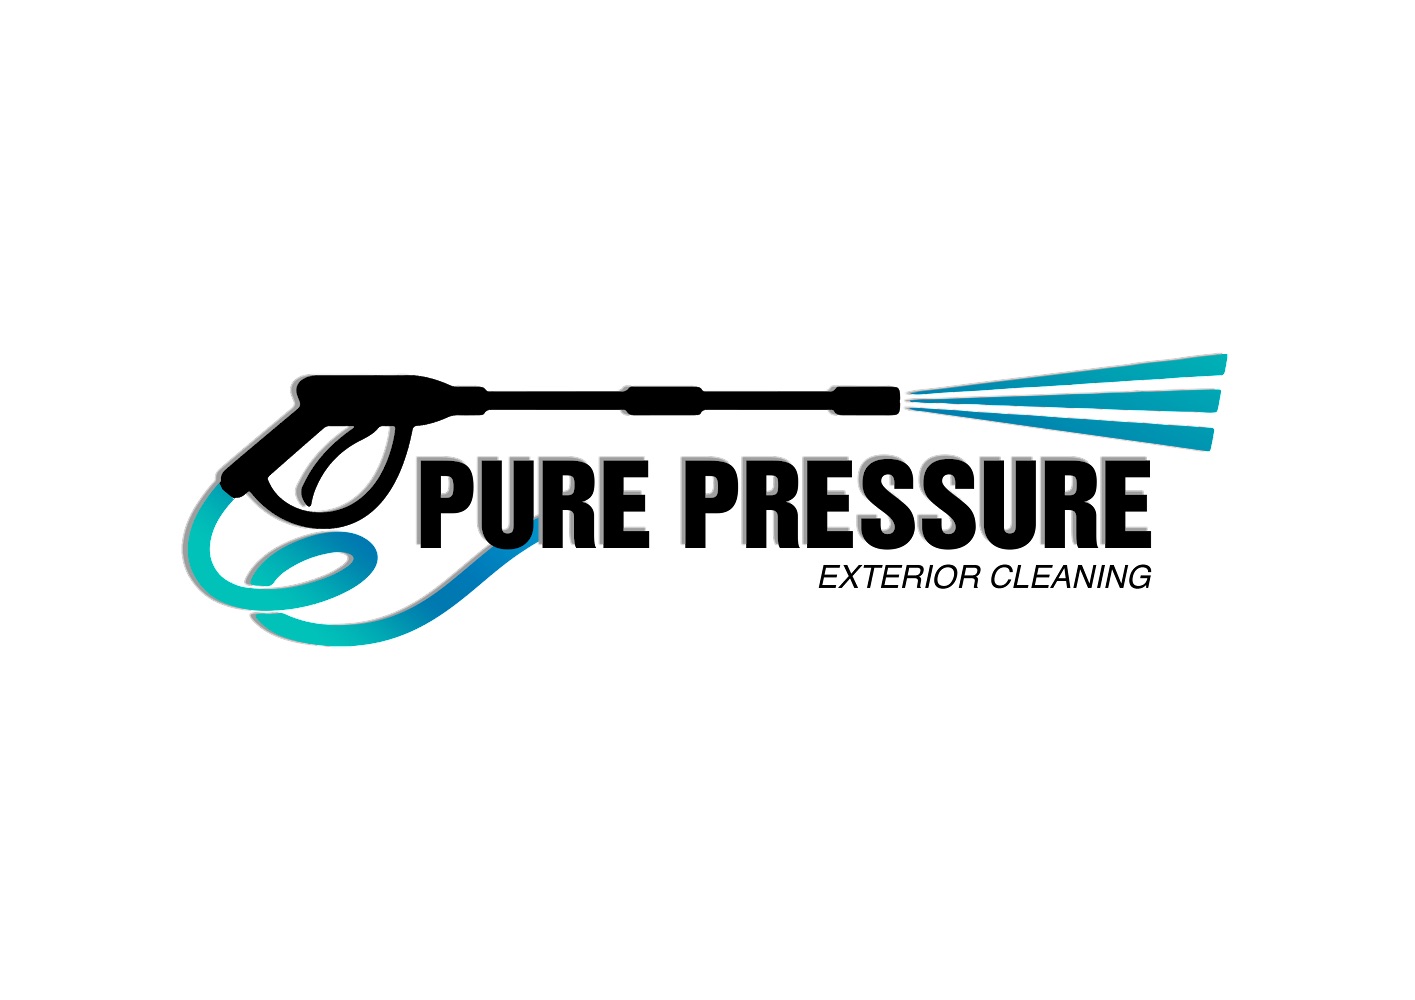 Pure-Pressure-Exterior-Cleaning-logo.jpg